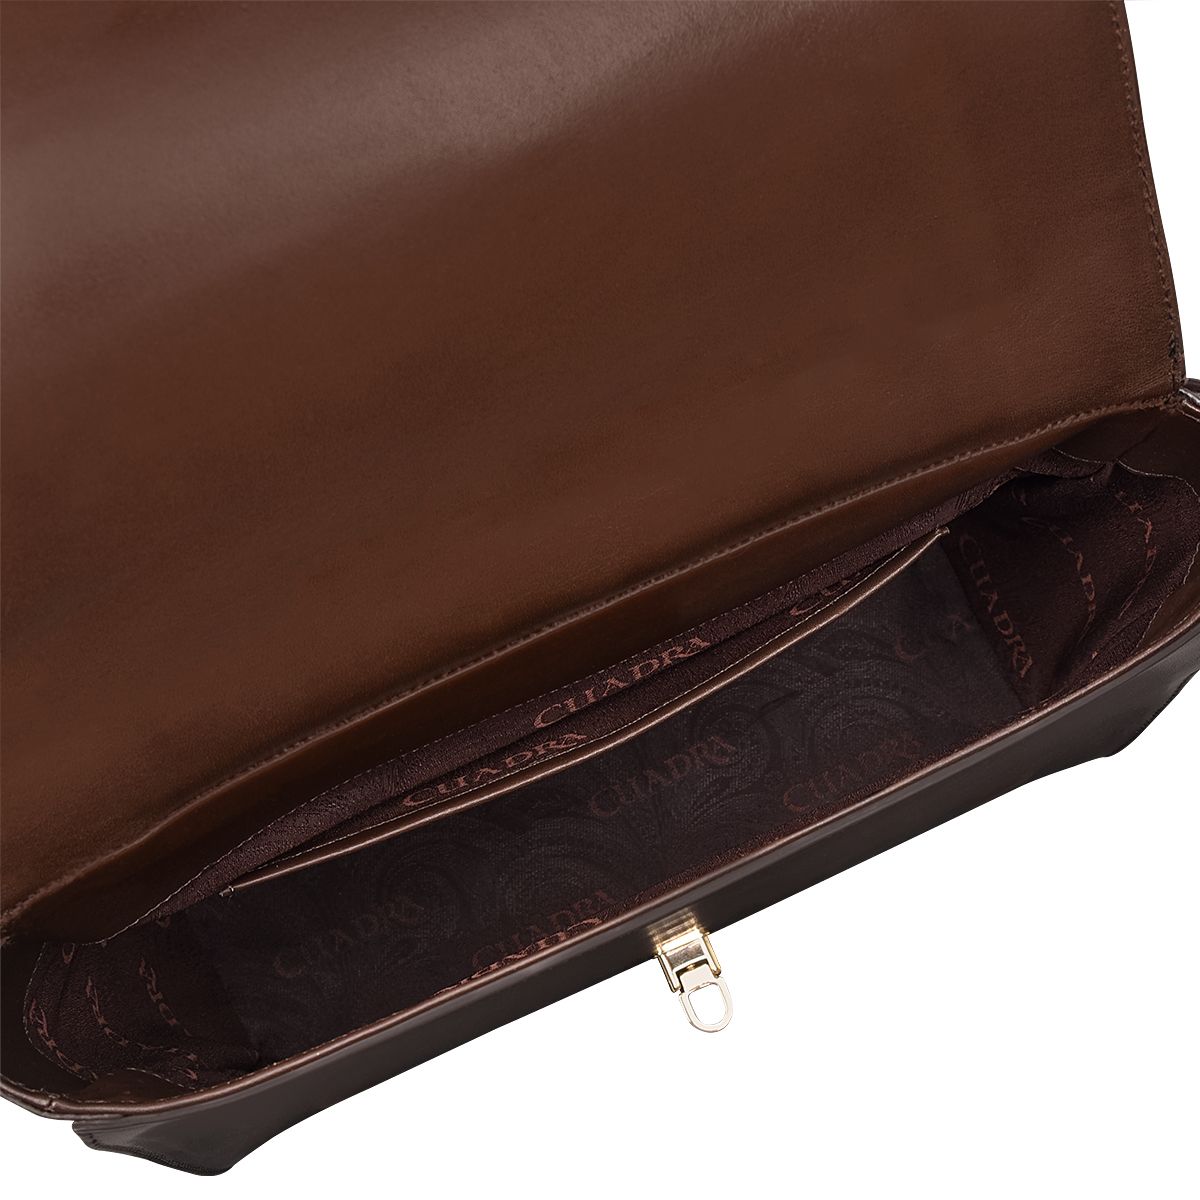 BOD33MA - Cuadra chocolate dress fashion stingray leather messenger for women-CUADRA-Kuet-Cuadra-Boots